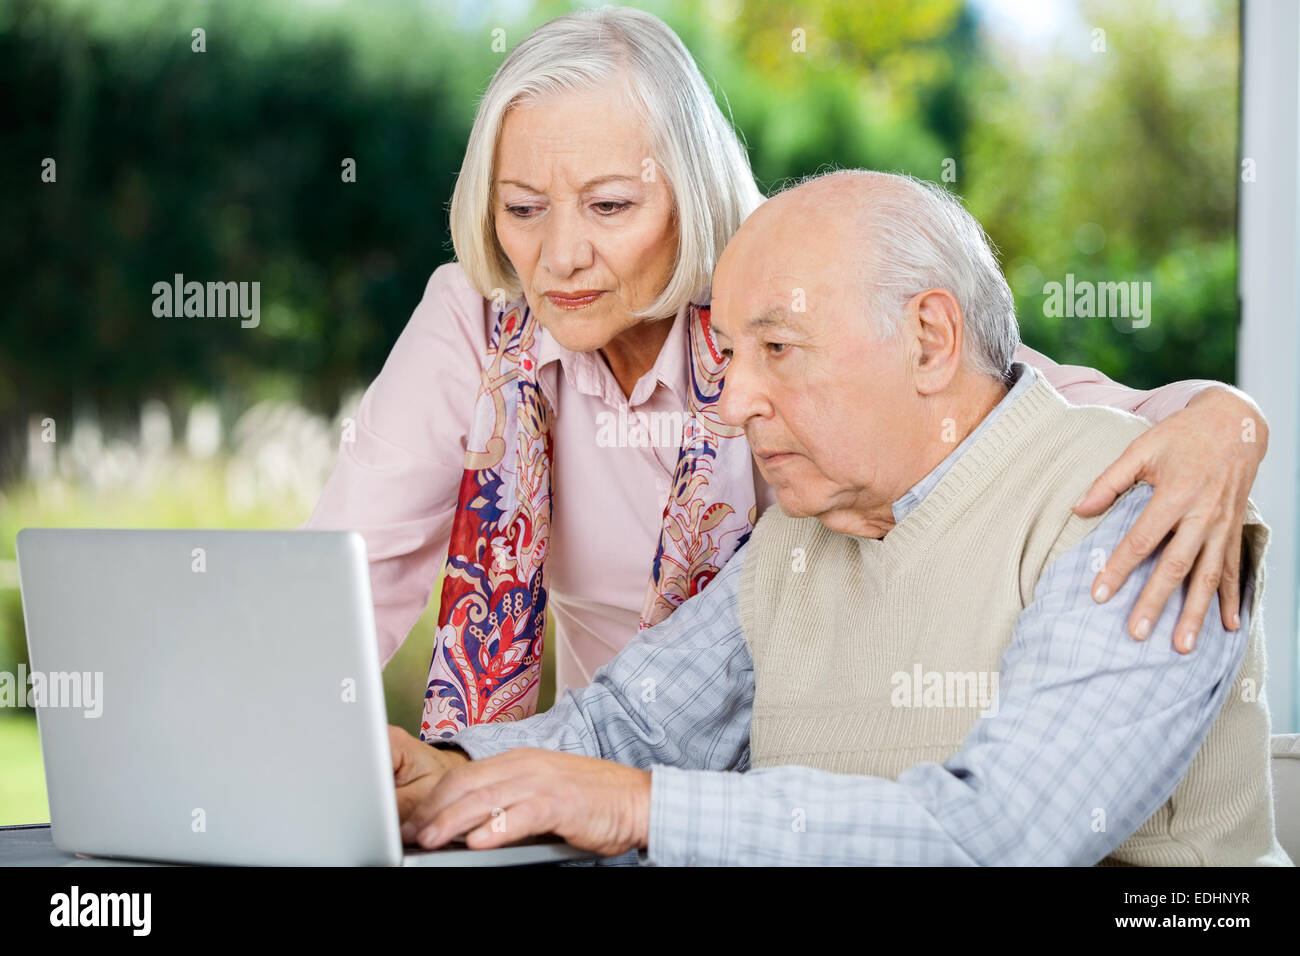 Serious Senior Man And Woman Using Laptop Stock Photo